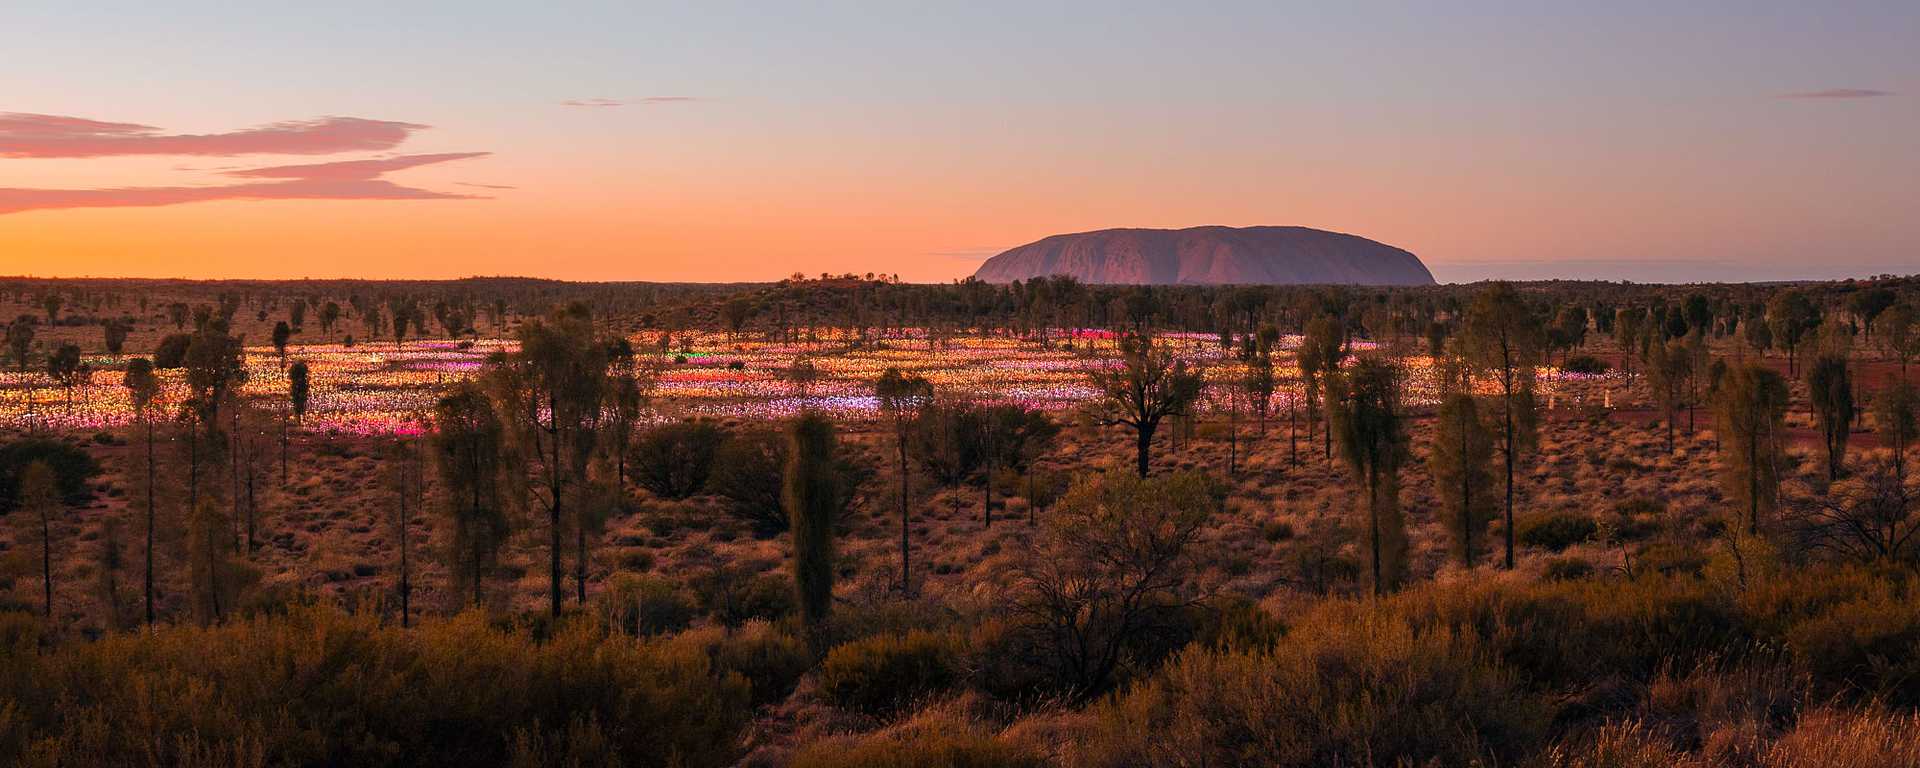 Uluru Field of Light in the Northern Territory, Australia